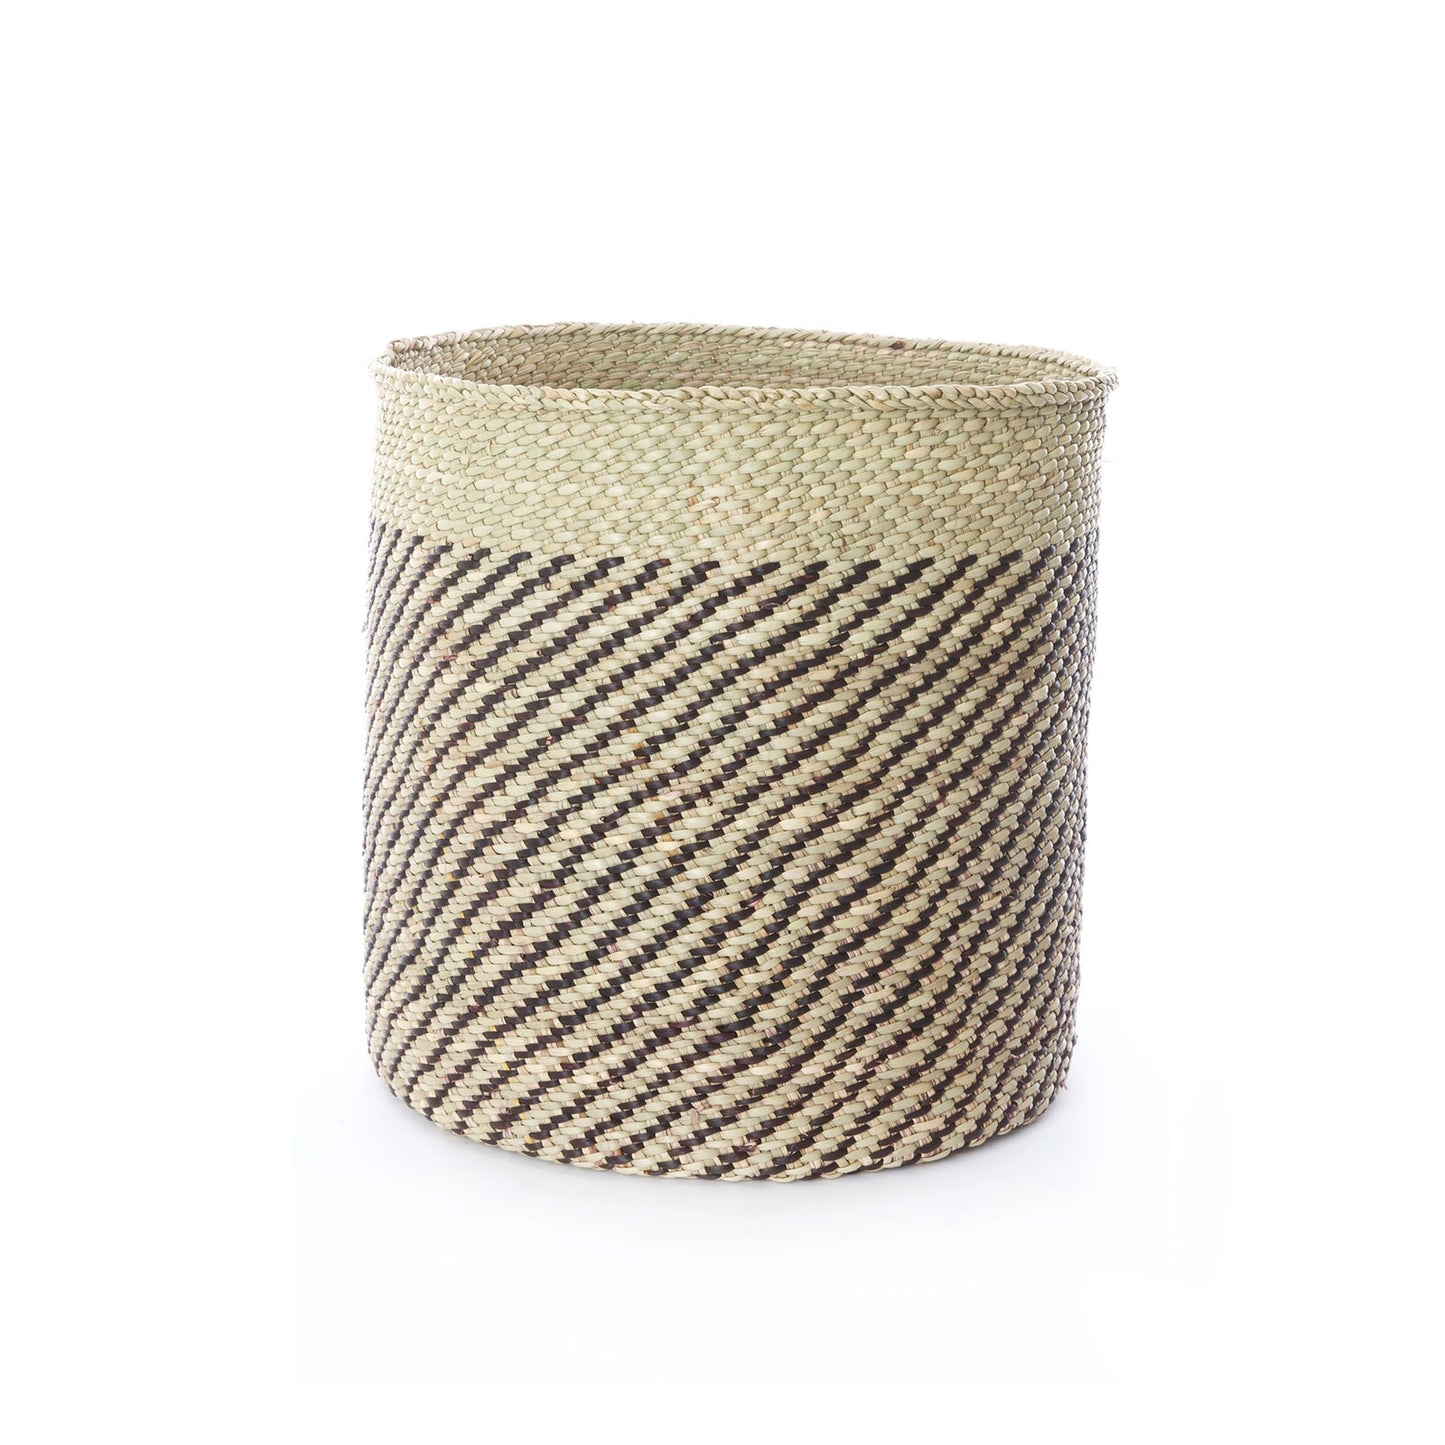 Iringa Basket with Diagonal Black Stripes, Large